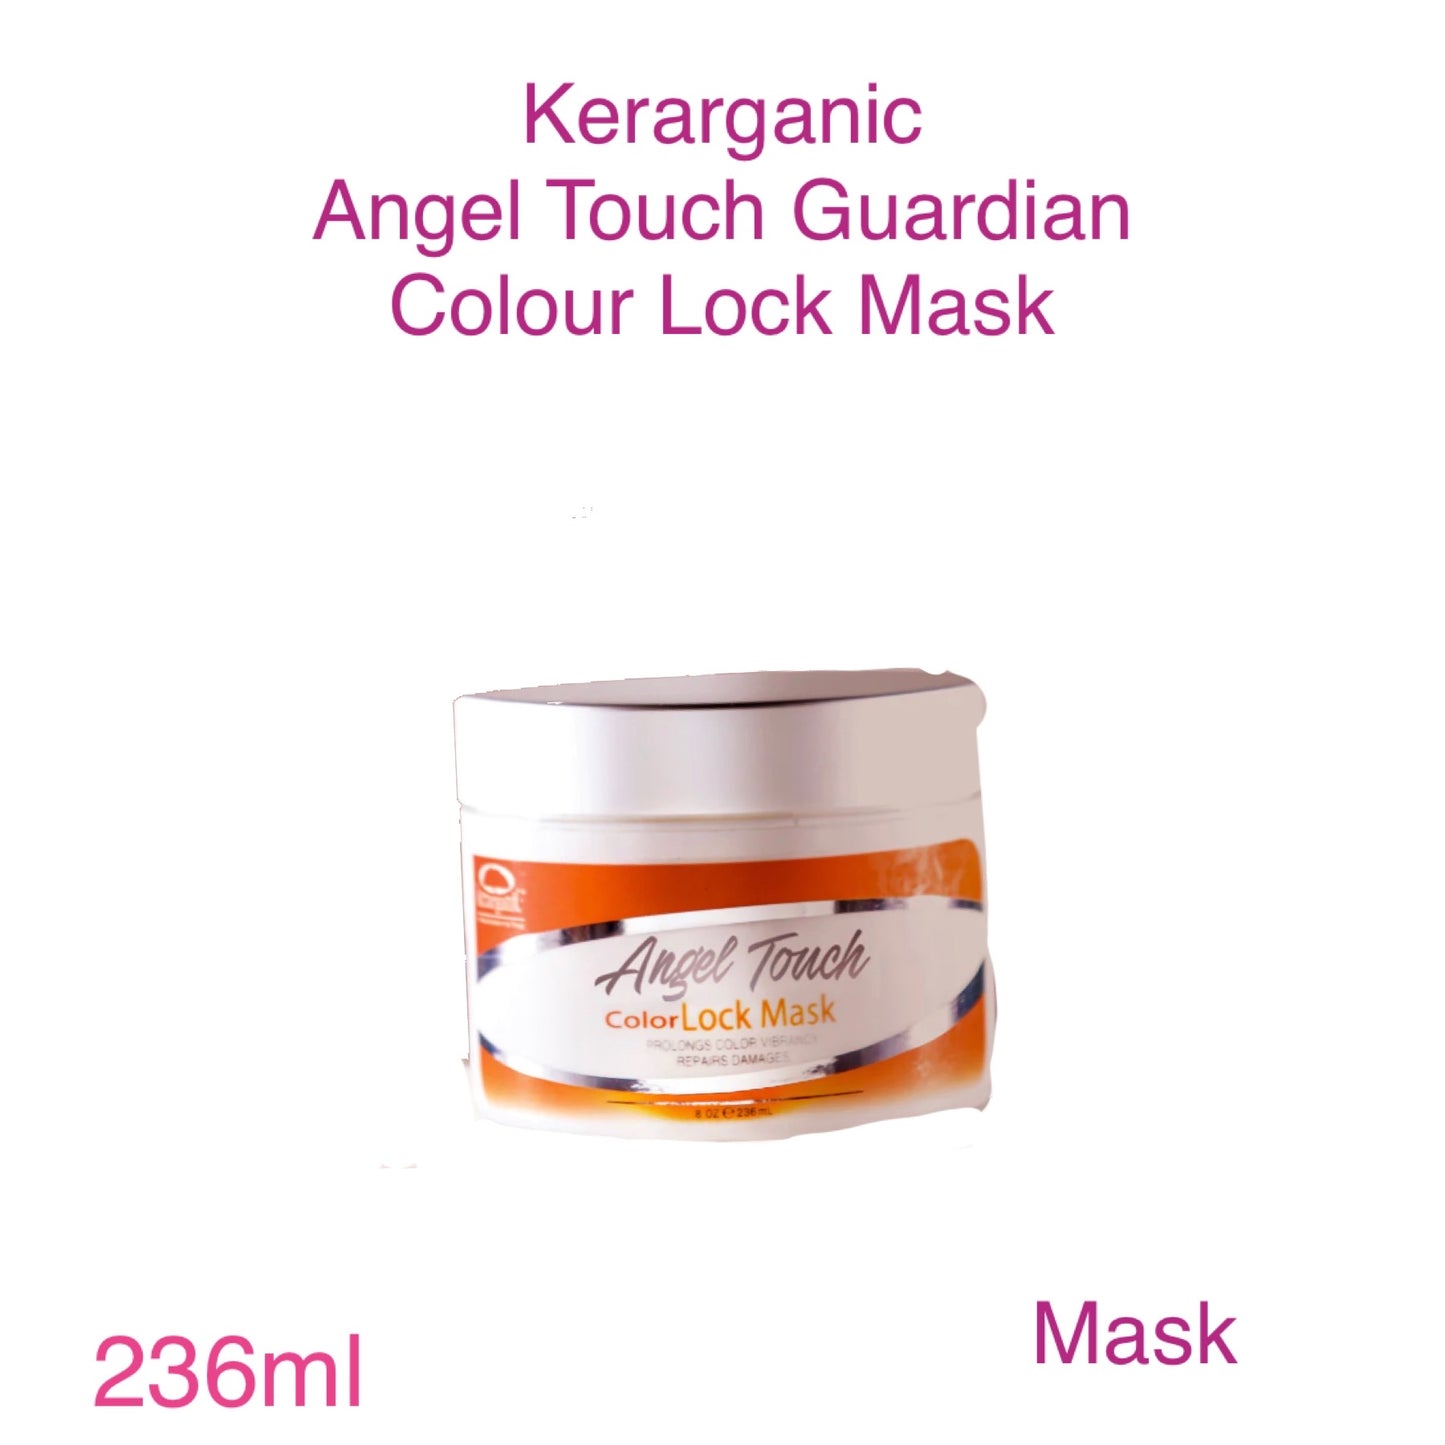 Kerarganic Angel Touch Colour Lock Mask 236ml